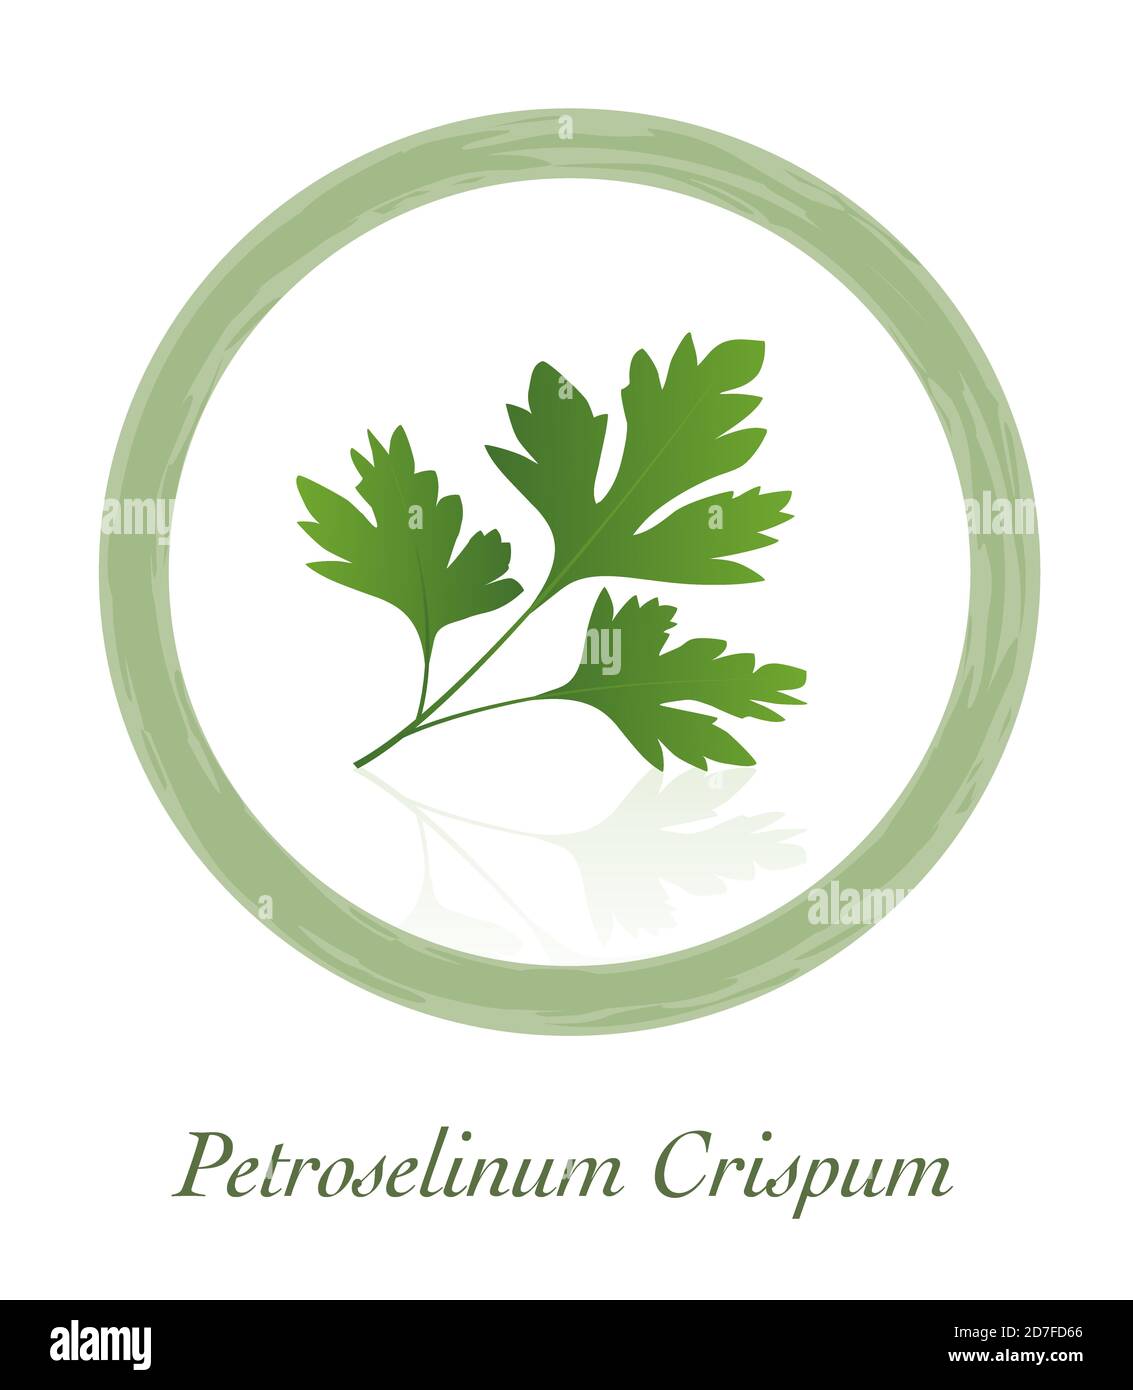 Parsley - Petroselinum Crispum - culinary herb logo - illustration on white background. Stock Photo